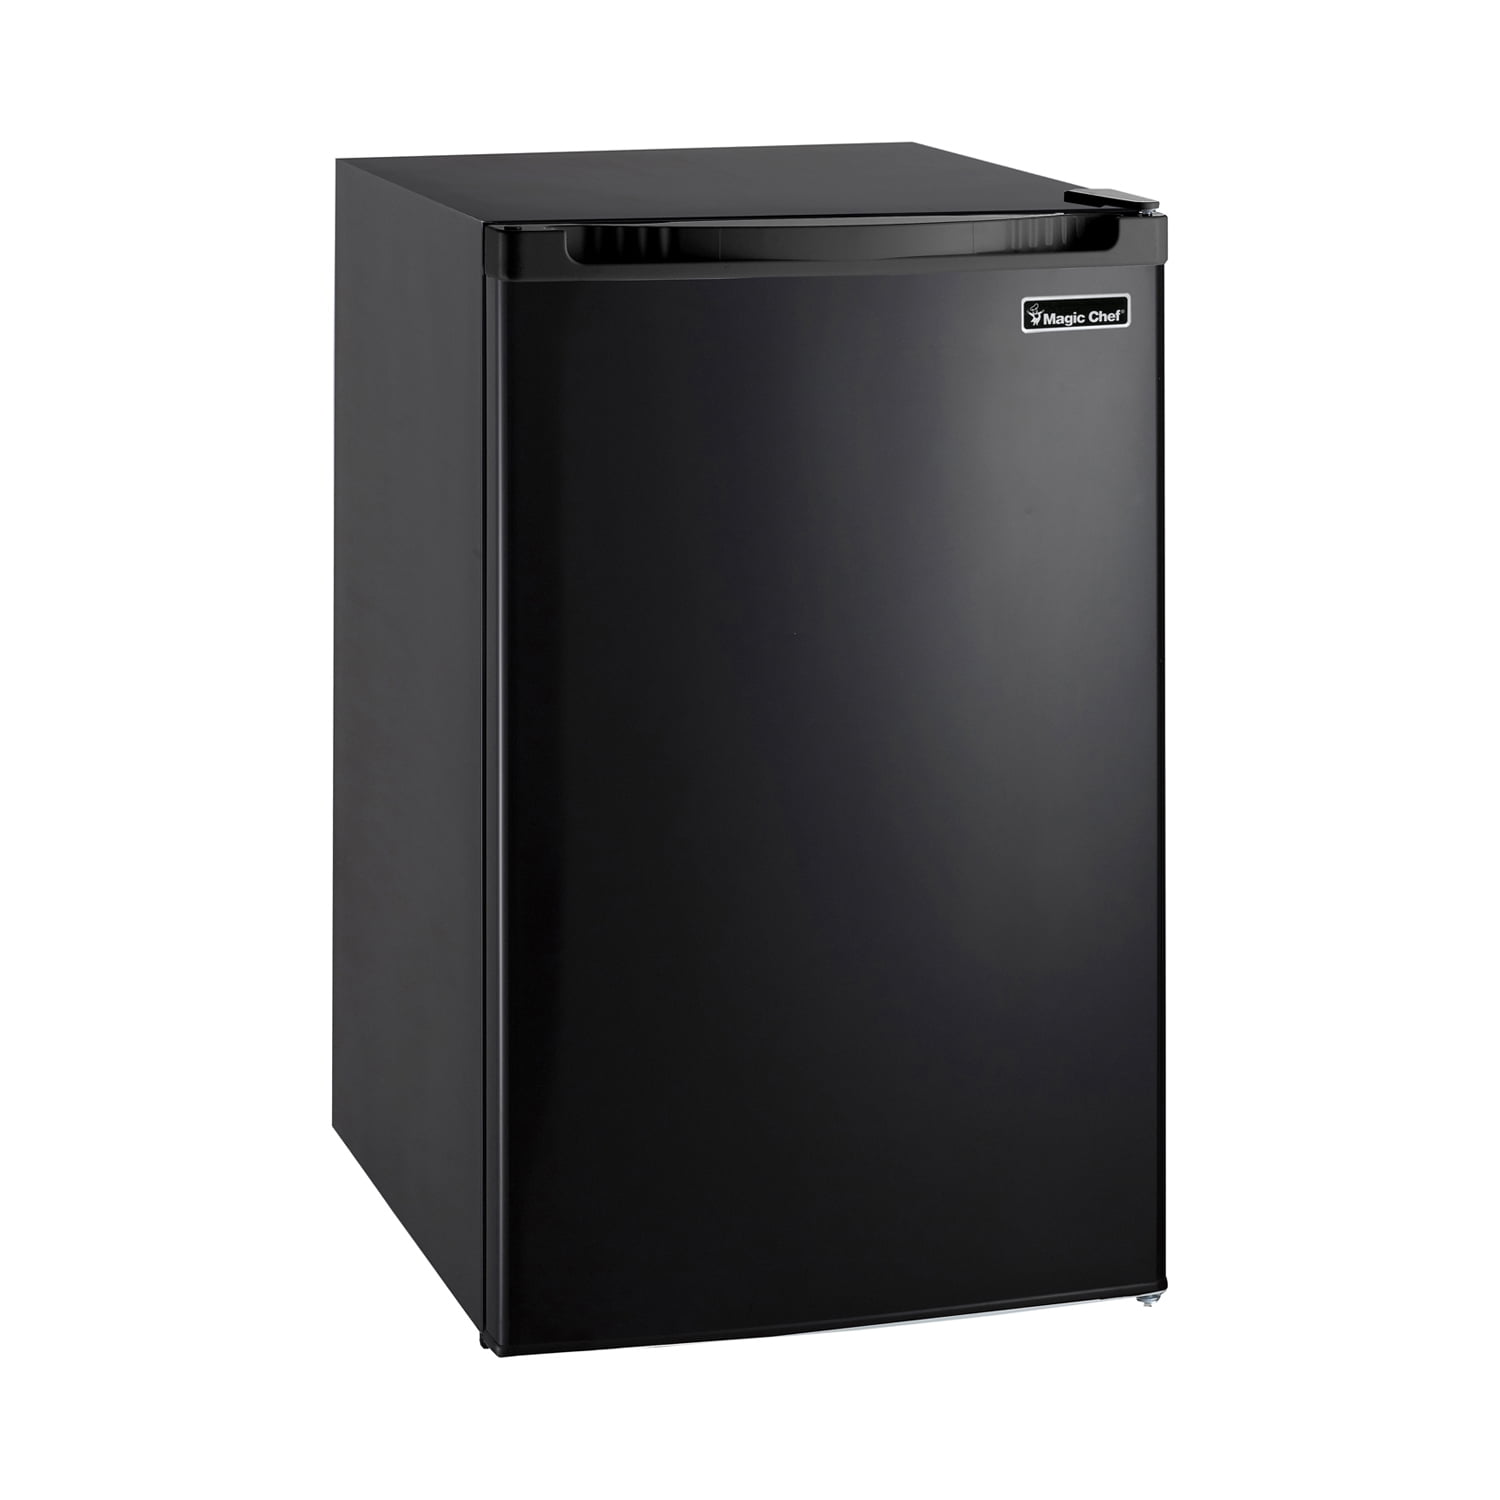 Magic Chef Energy Star 18.5” 3.5 Cu. Ft. Compact Refrigerator in Black,  Single Door 